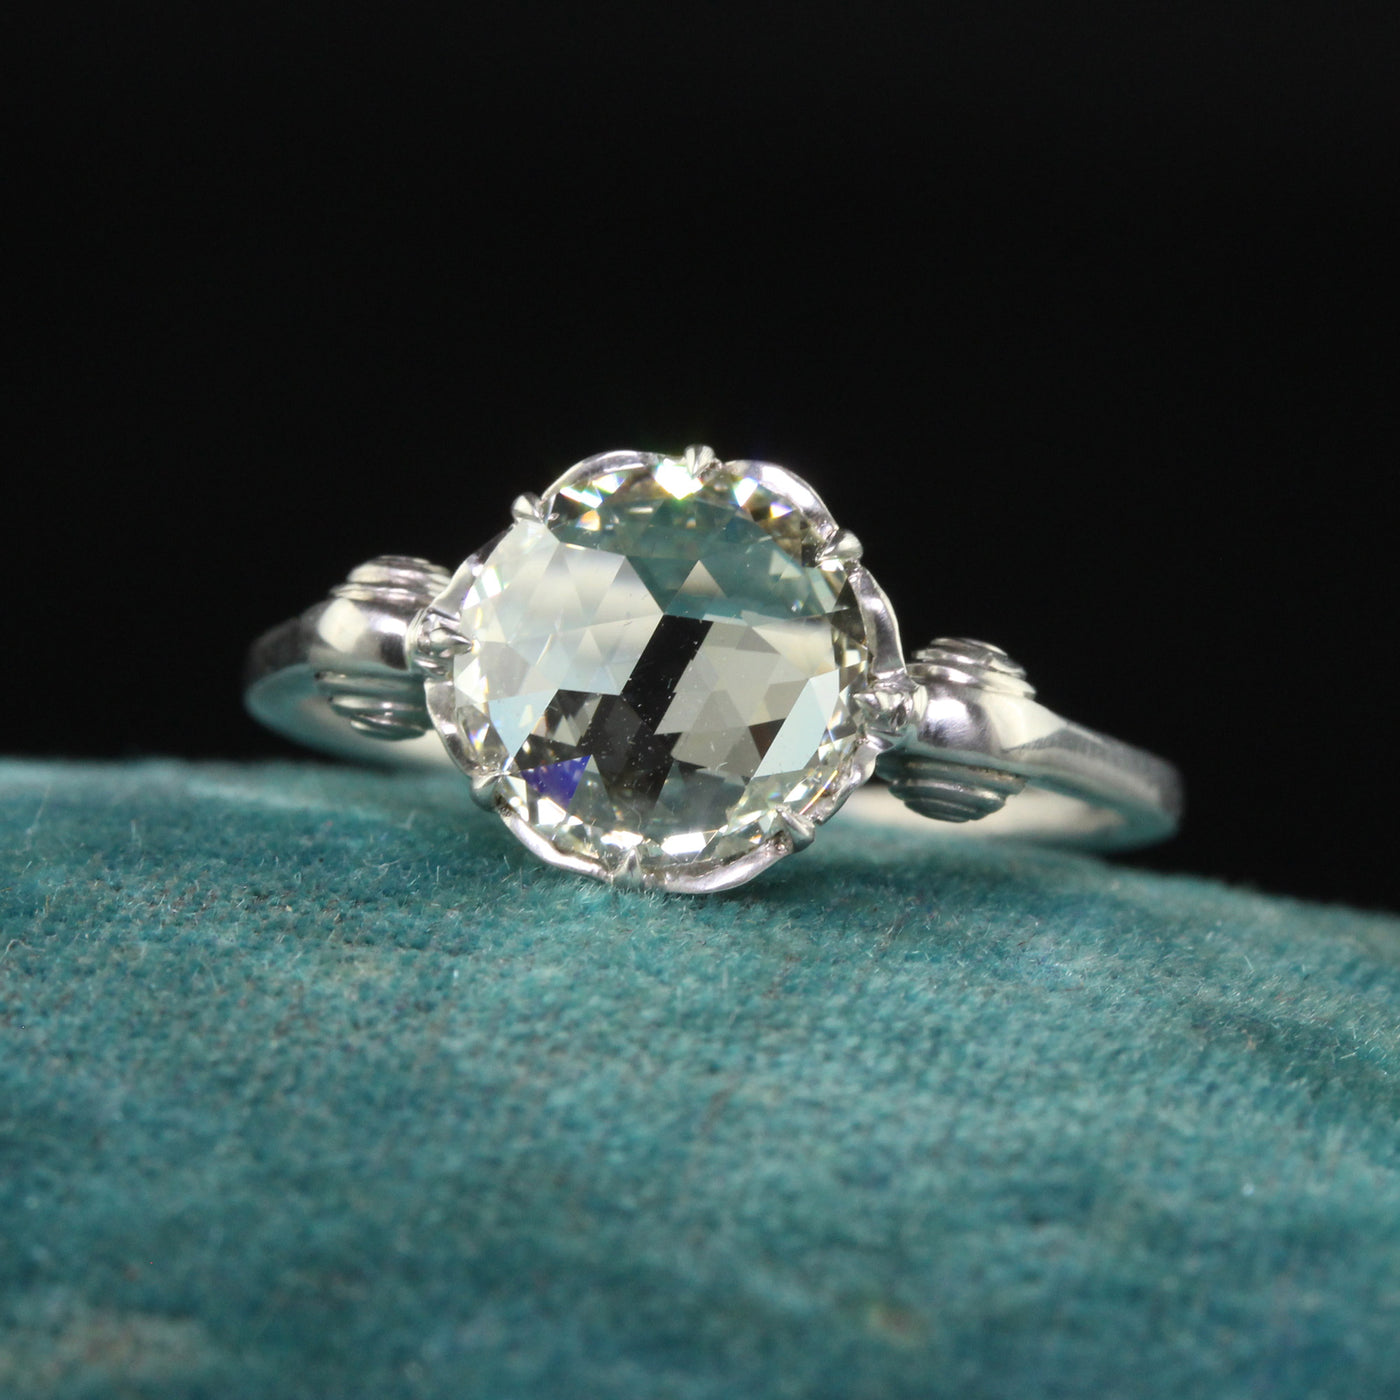 Antique Edwardian Platinum Old Rose Cut Diamond Engagement Ring - Size 5 1/4